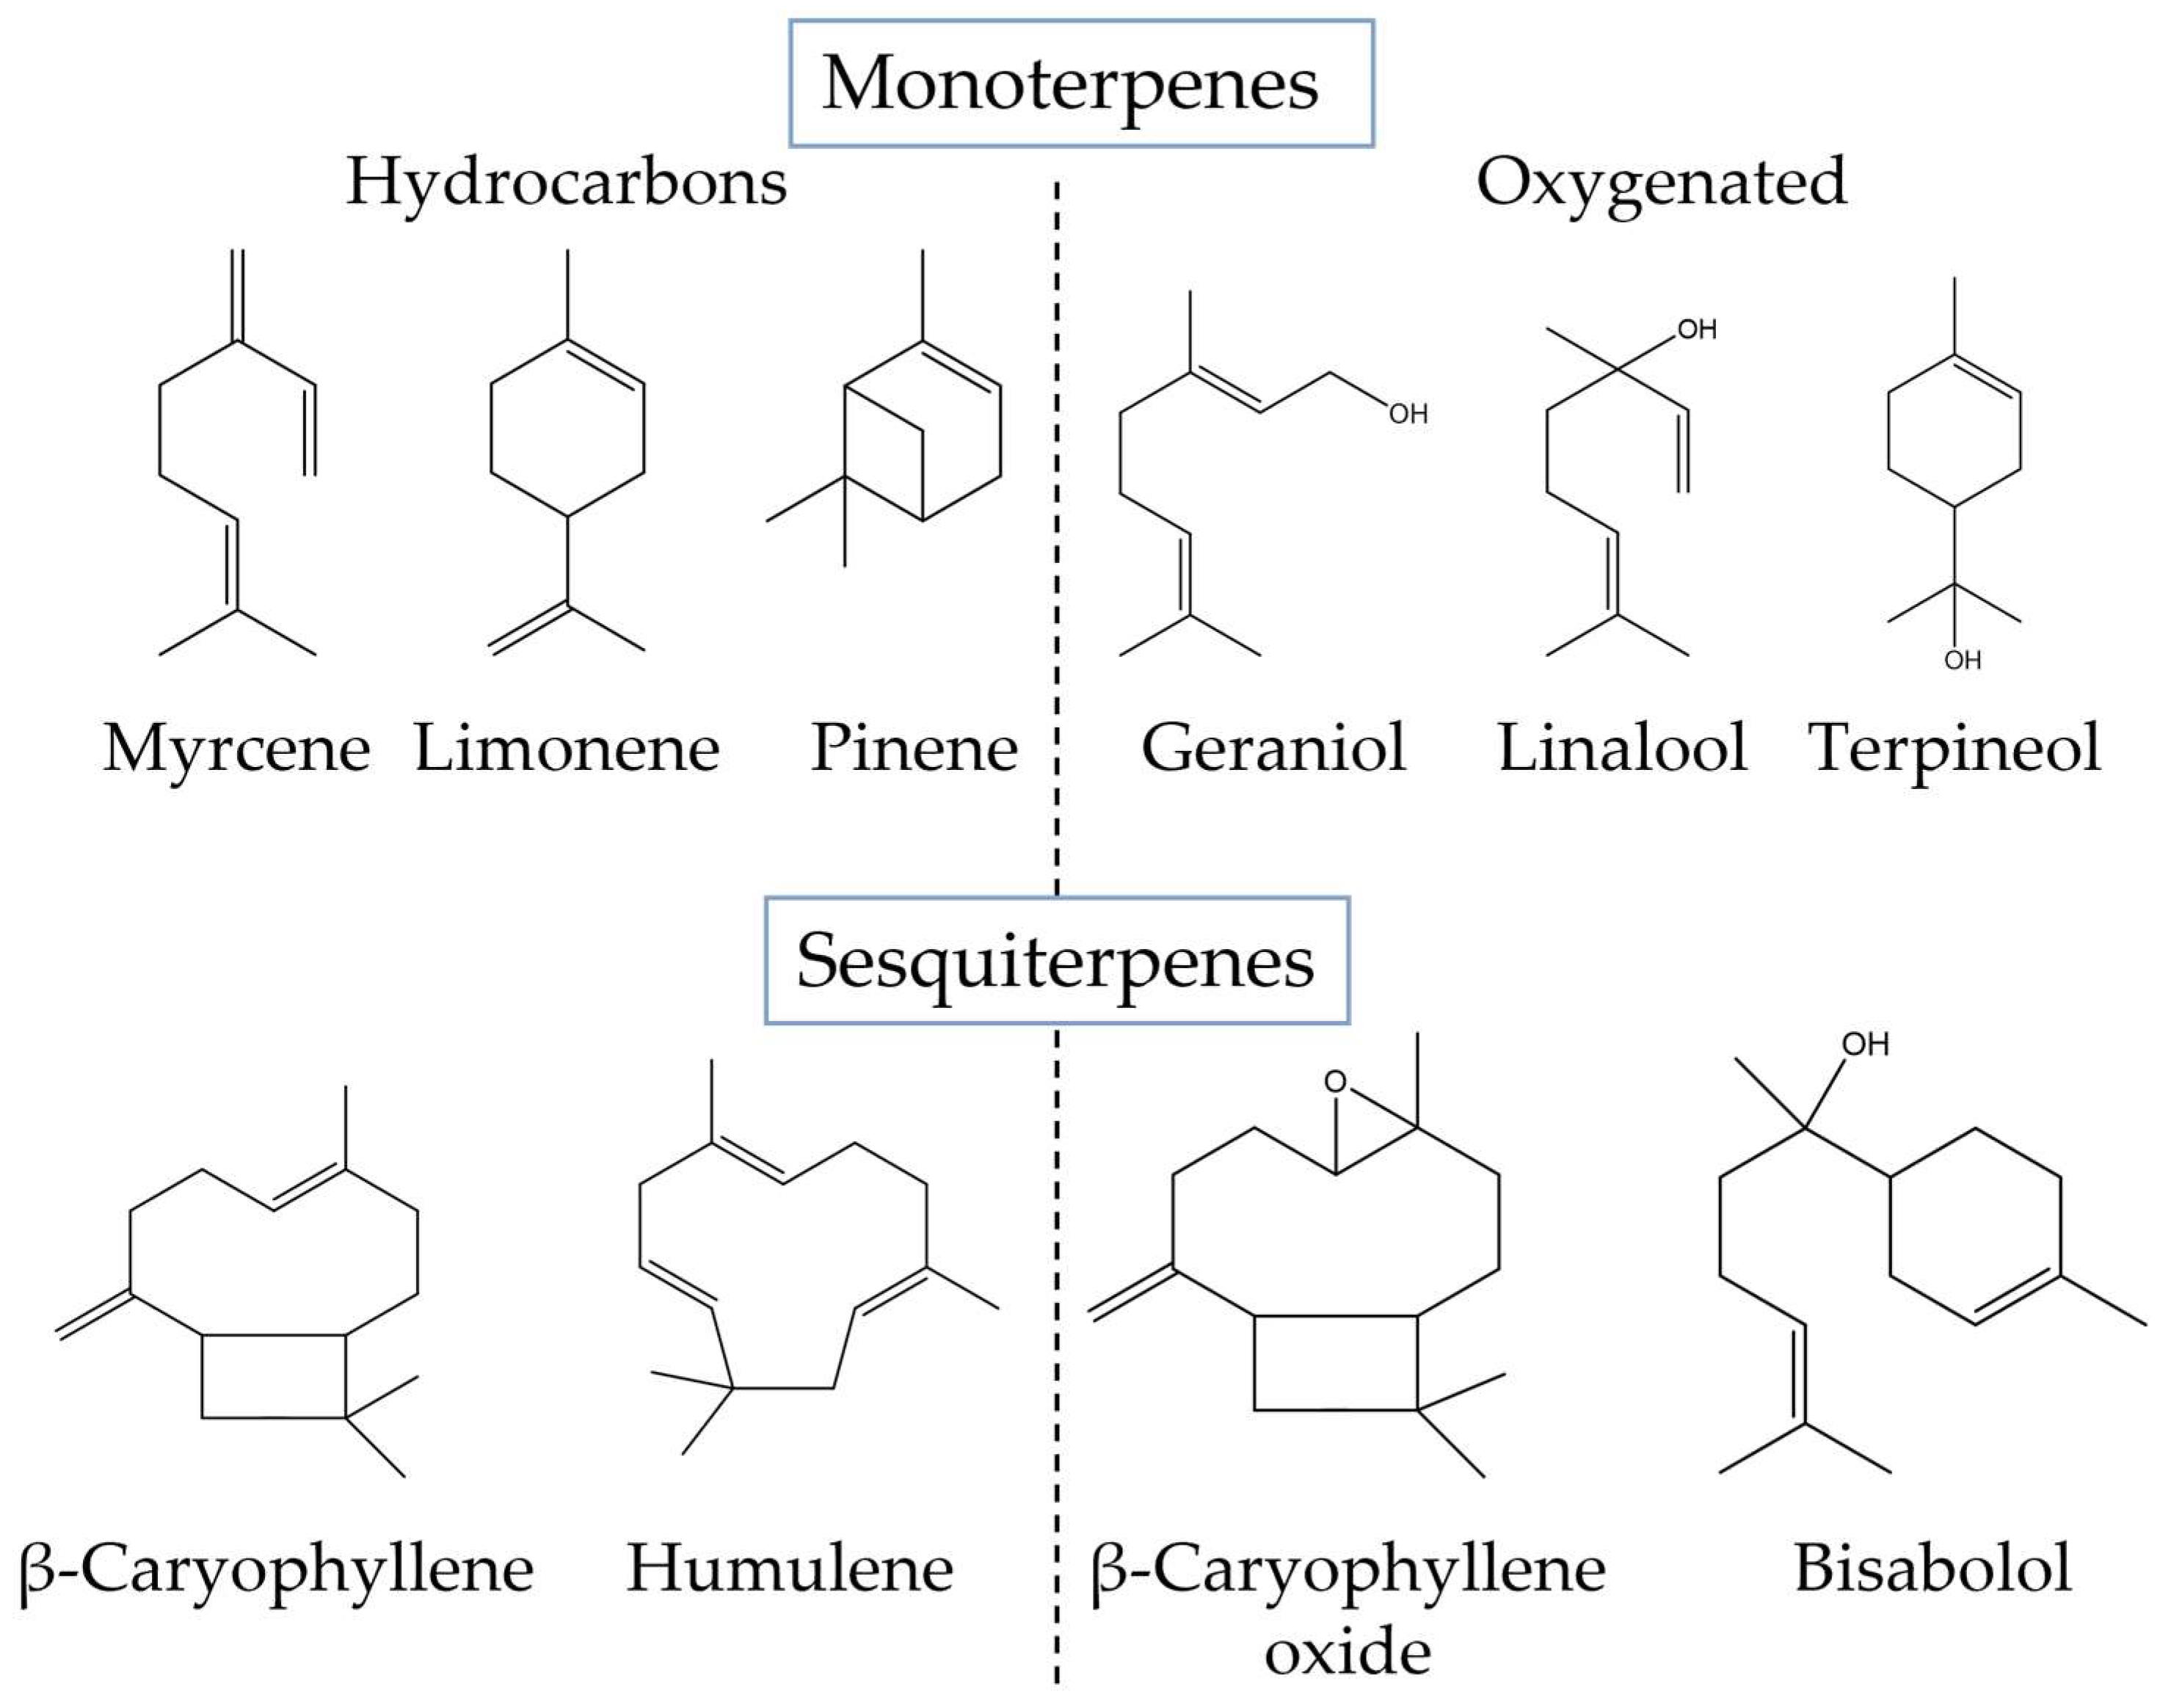 https://www.mdpi.com/biomolecules/biomolecules-13-00764/article_deploy/html/images/biomolecules-13-00764-g003.png